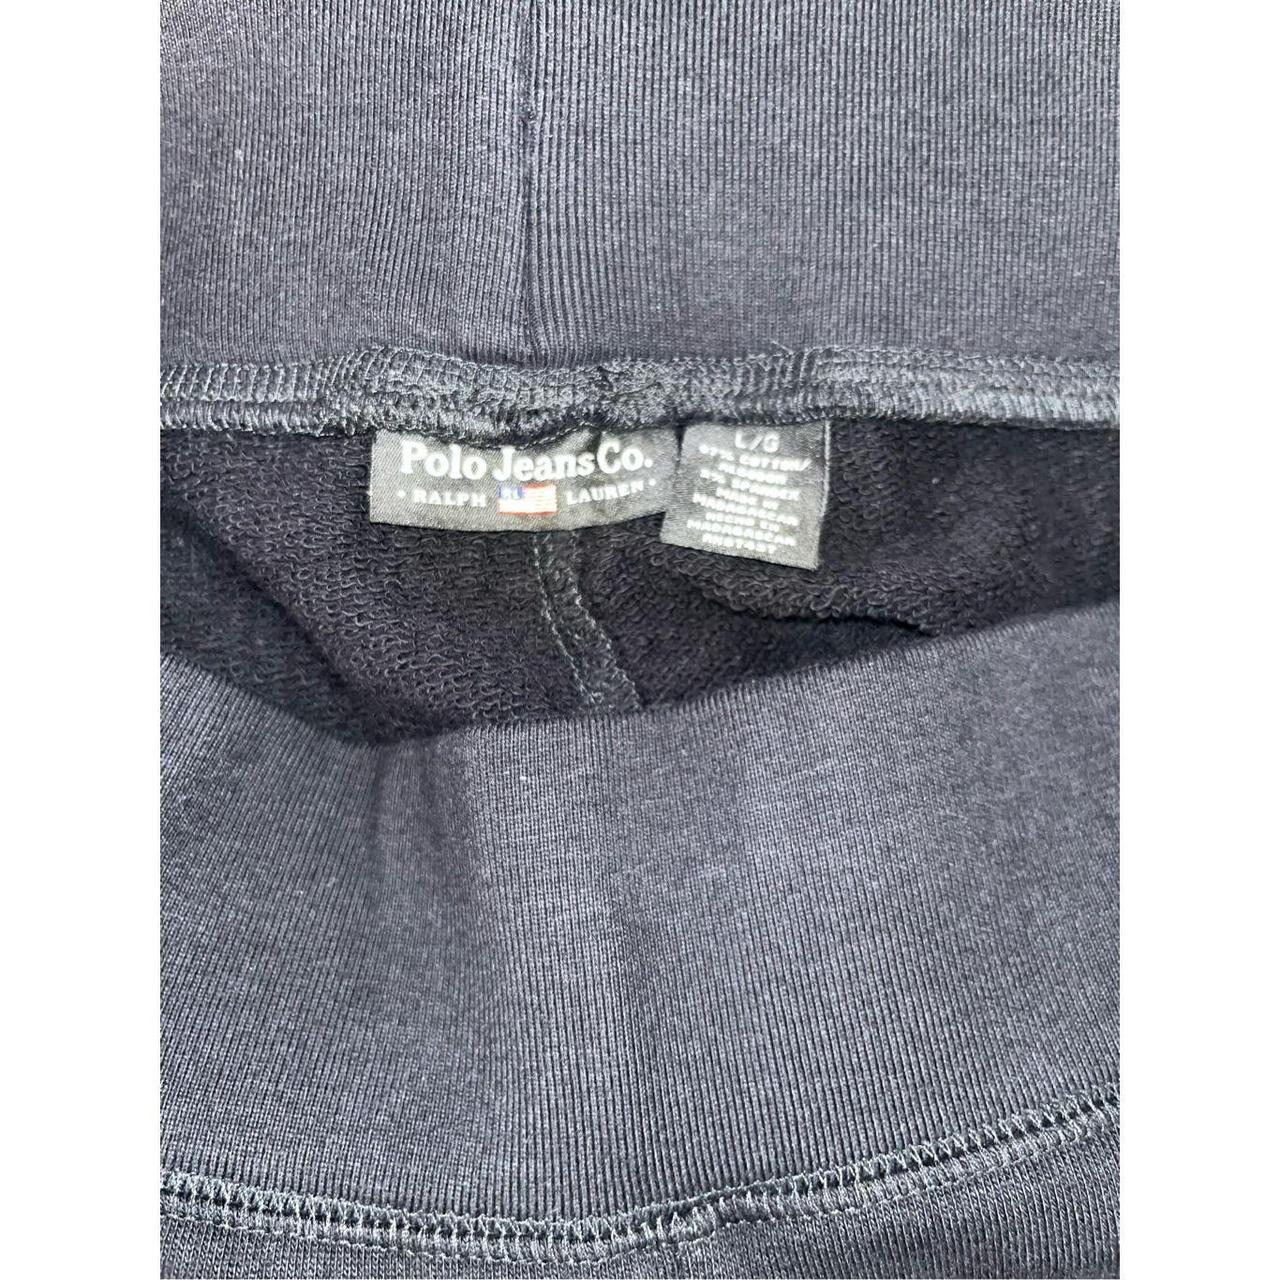 Polo Jeans Co. sweatpants Side snap button front - Depop